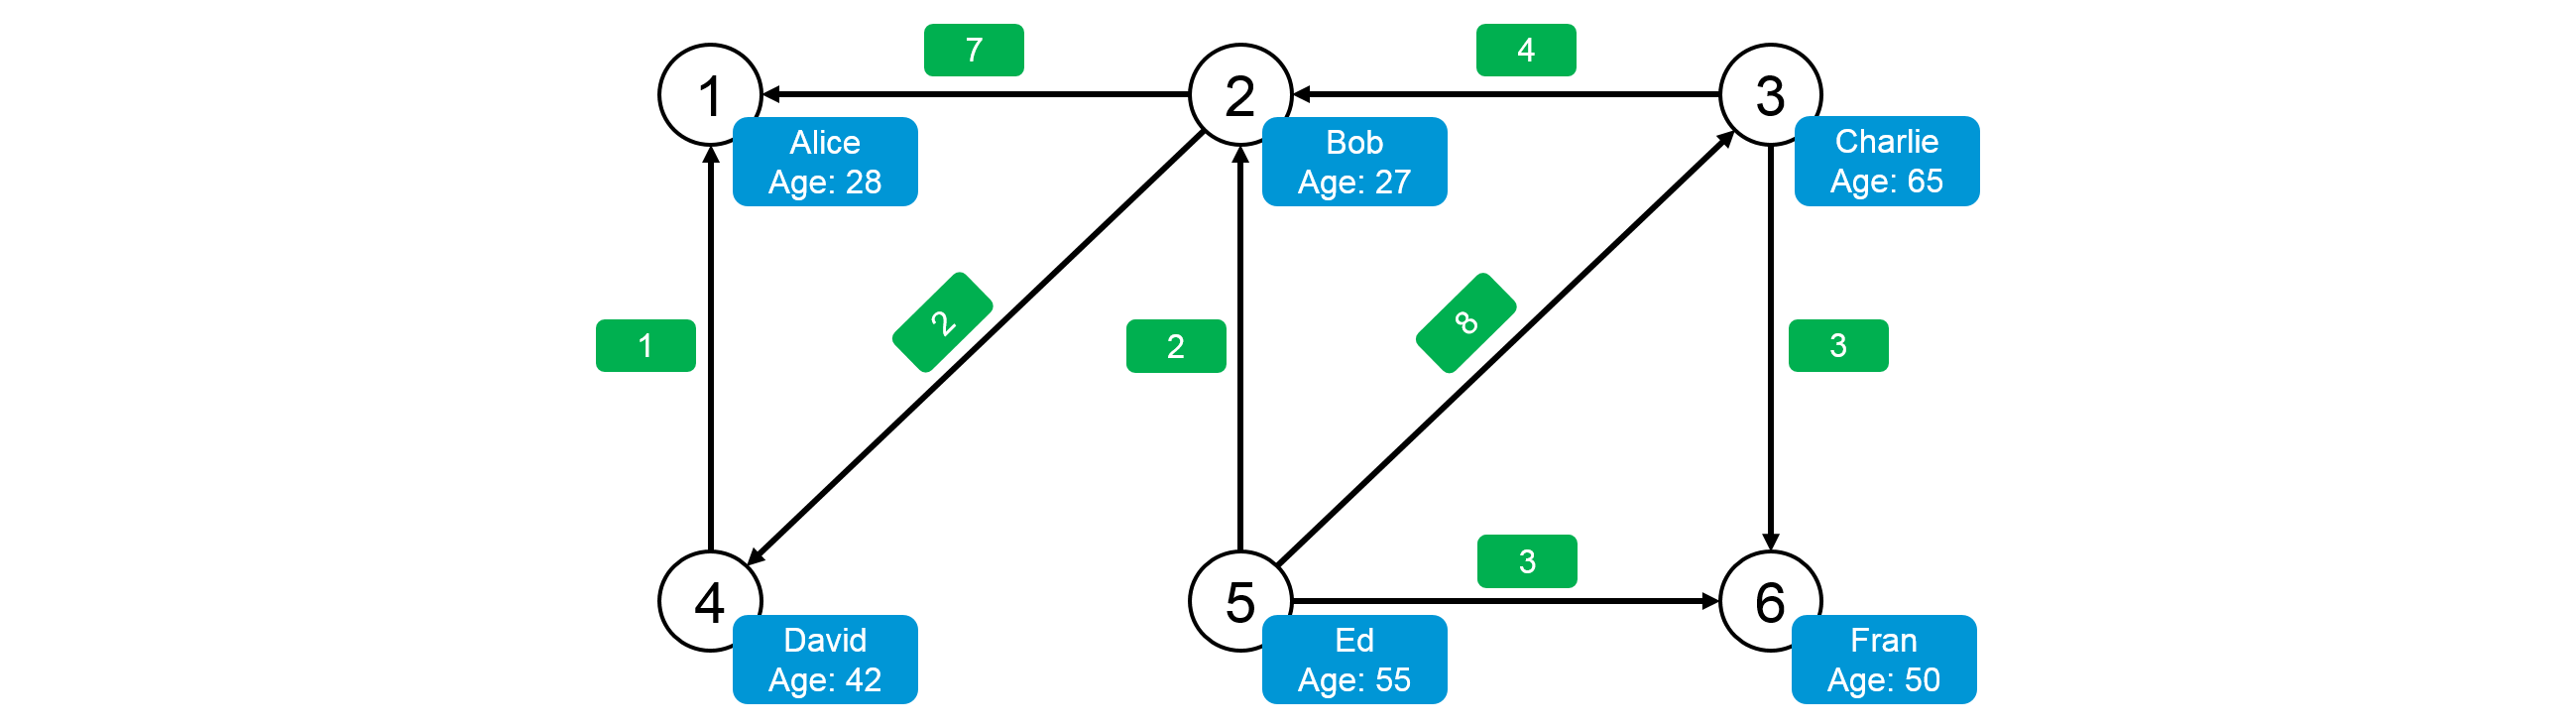 GraphX Example - Spark GraphX Tutorial - Edureka